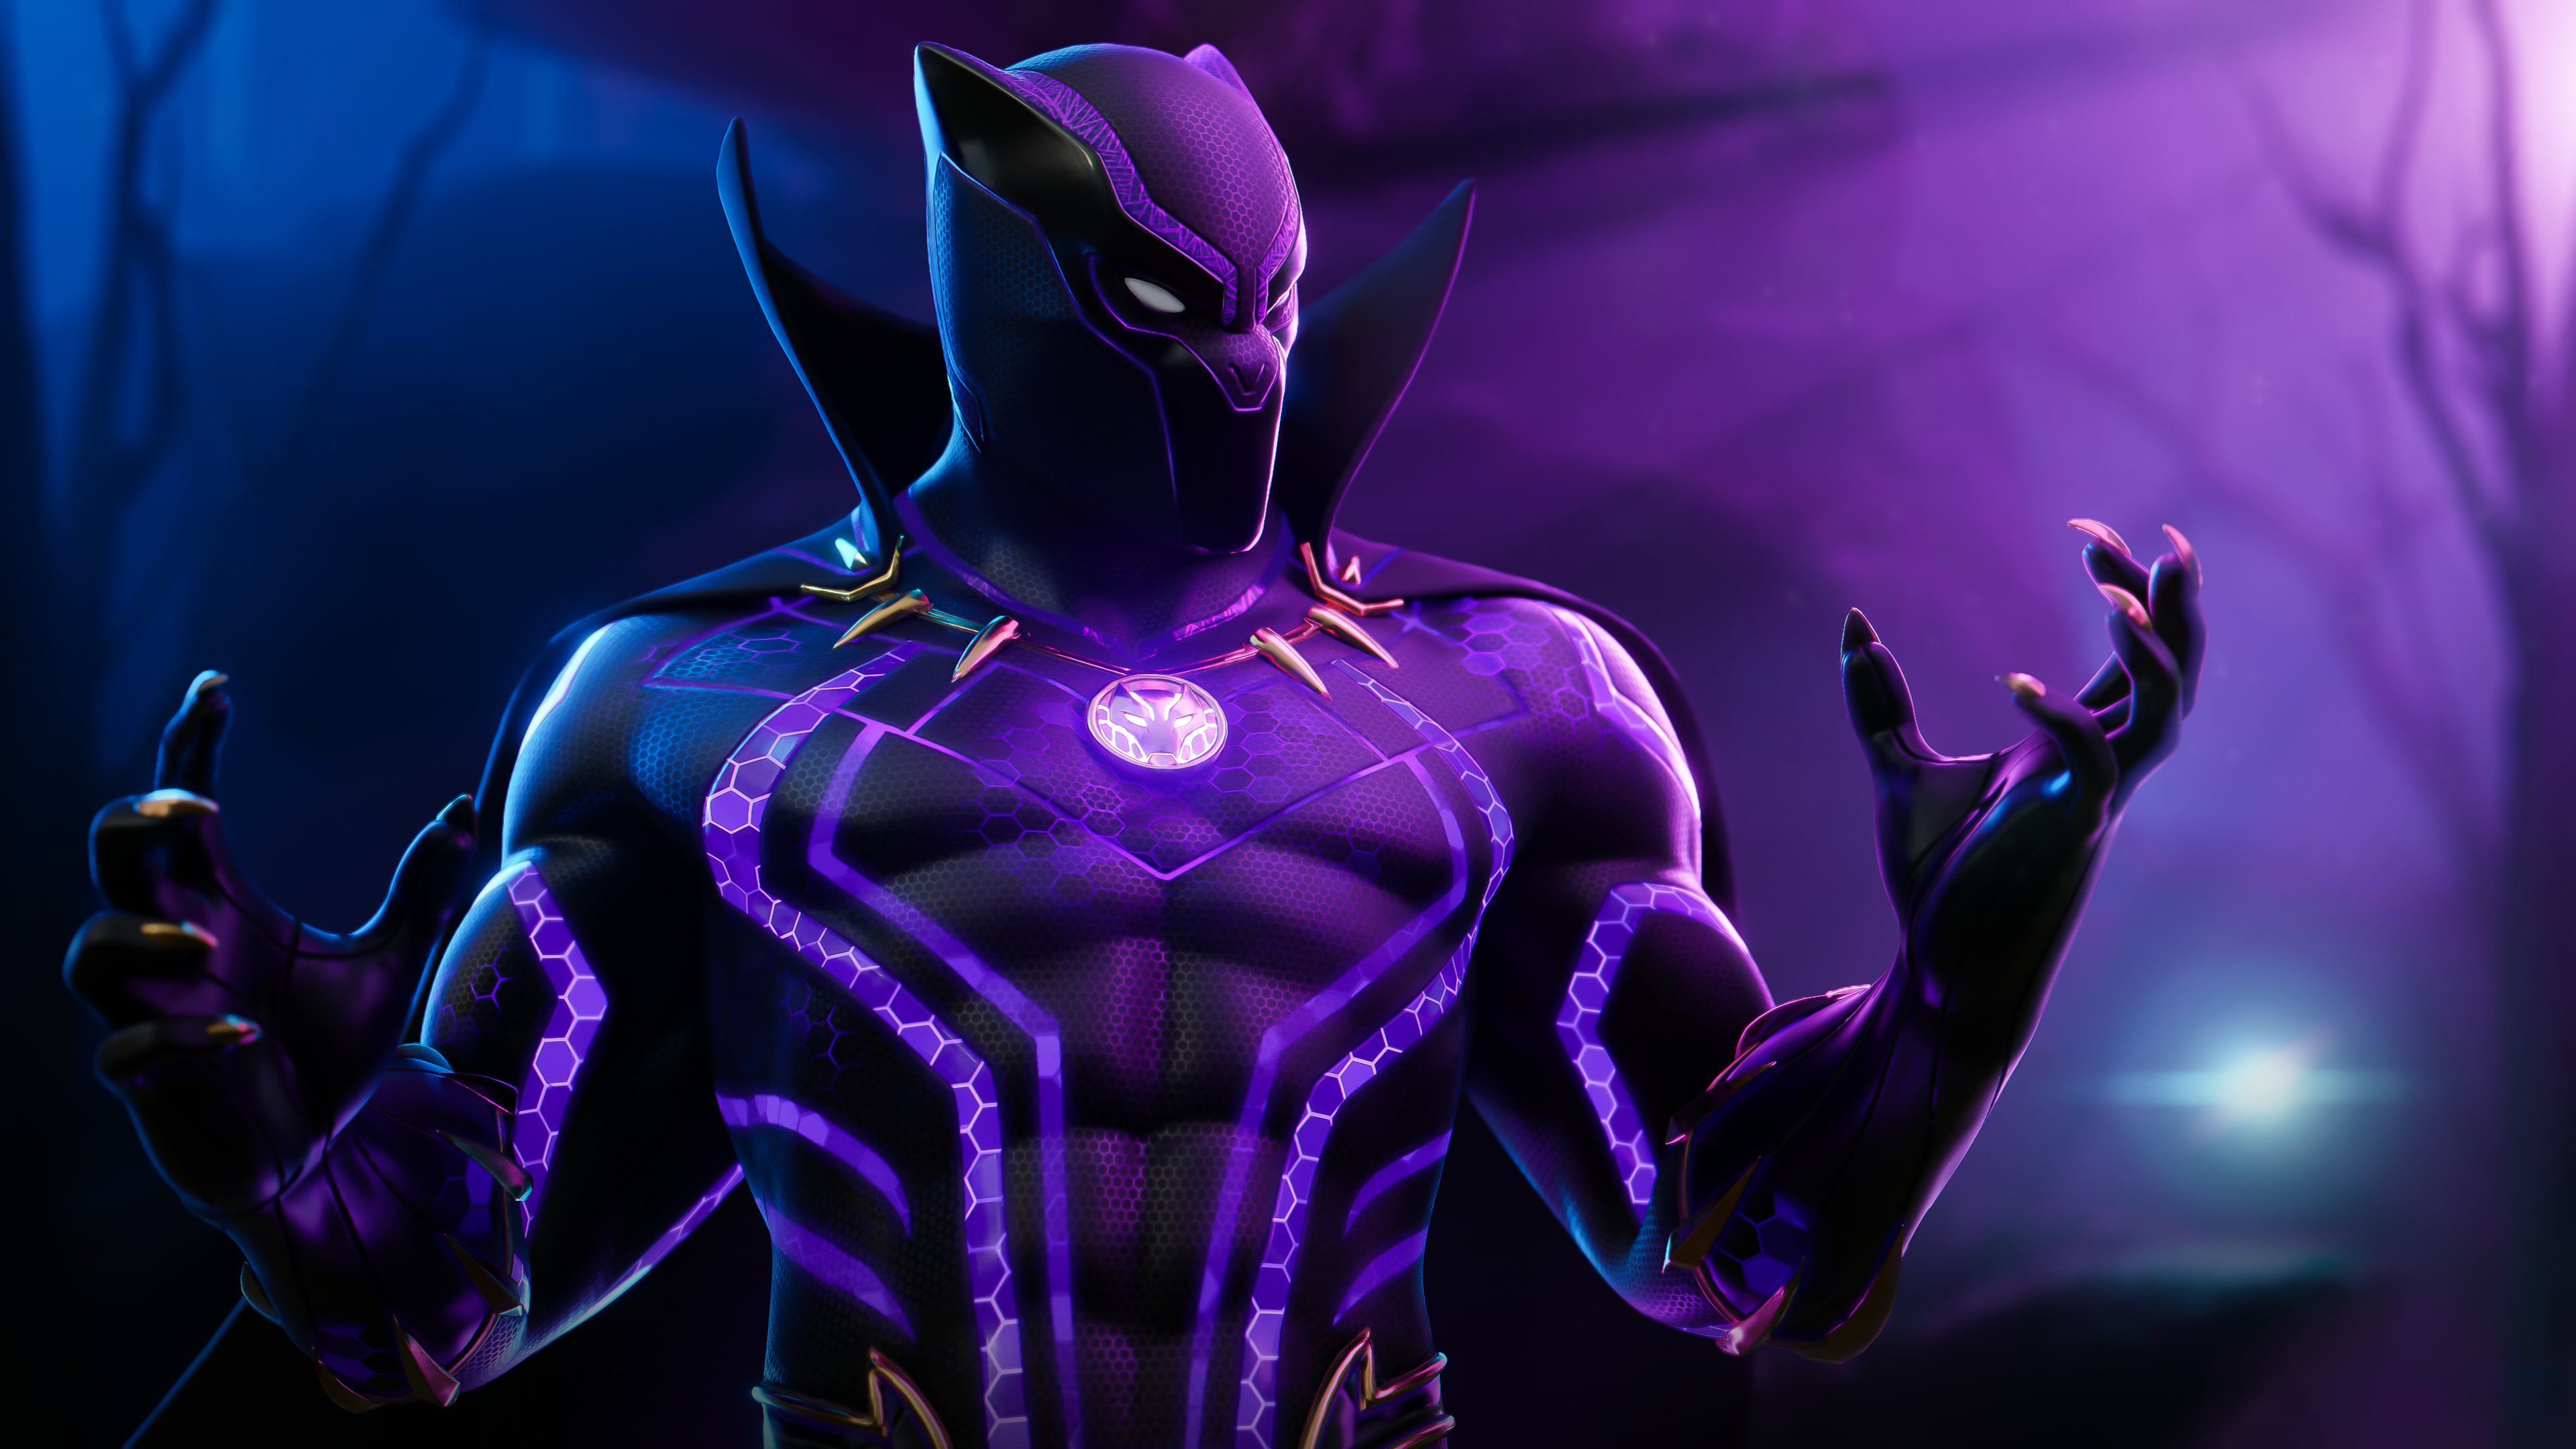 Black Panther 4K Wallpaper, Fortnite, Skin, 2020 Games, Neon, Games